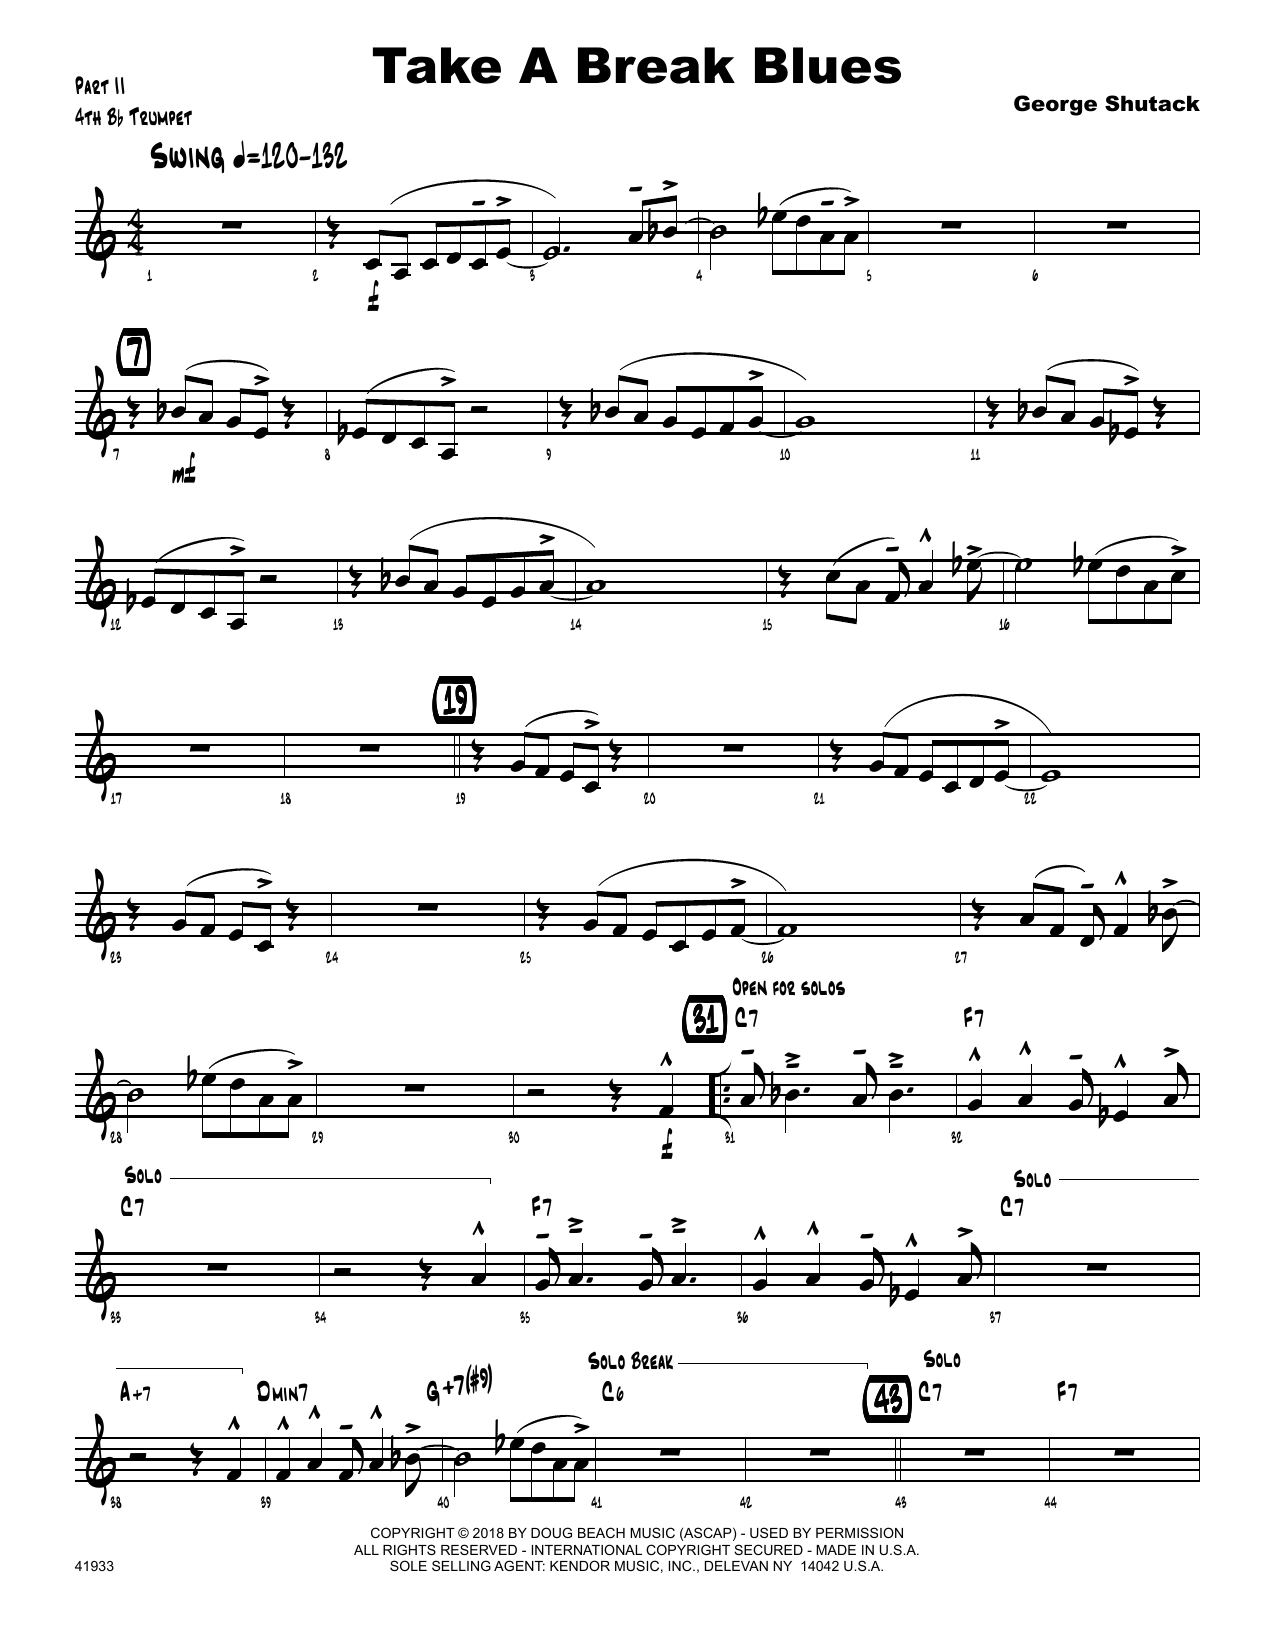 Download George Shutack Take A Break Blues - 4th Bb Trumpet Sheet Music